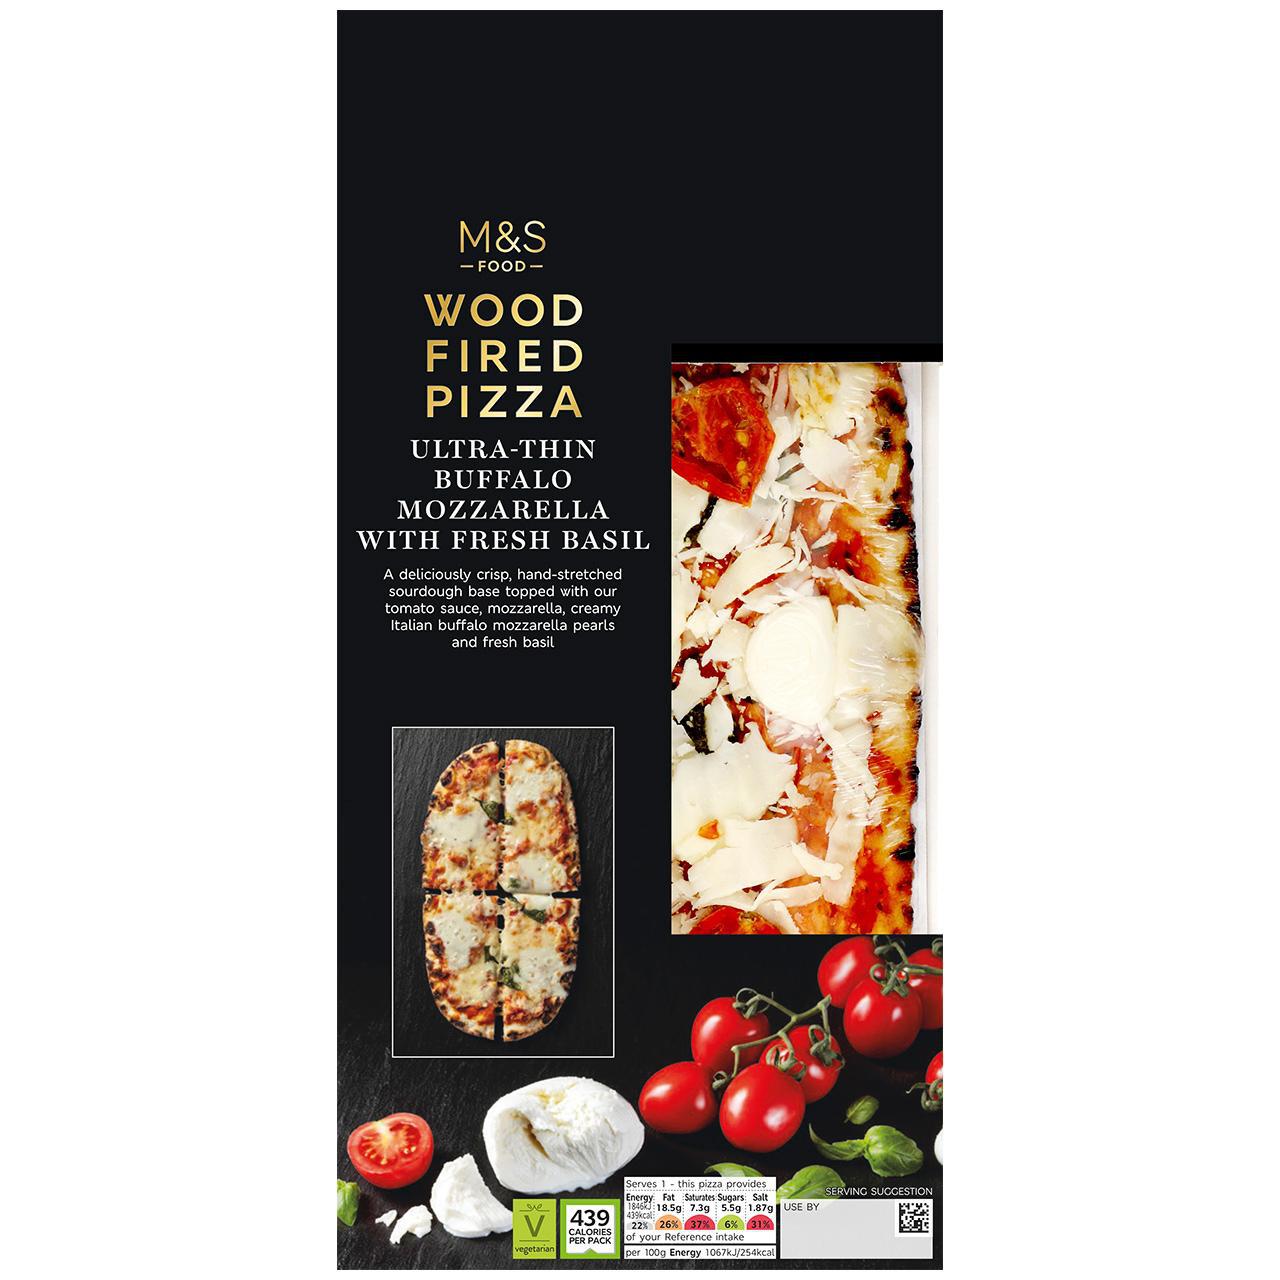 M&S Ultra Thin Wood Fired Pizza with Buffalo Mozzarella with Fresh Basil 173g